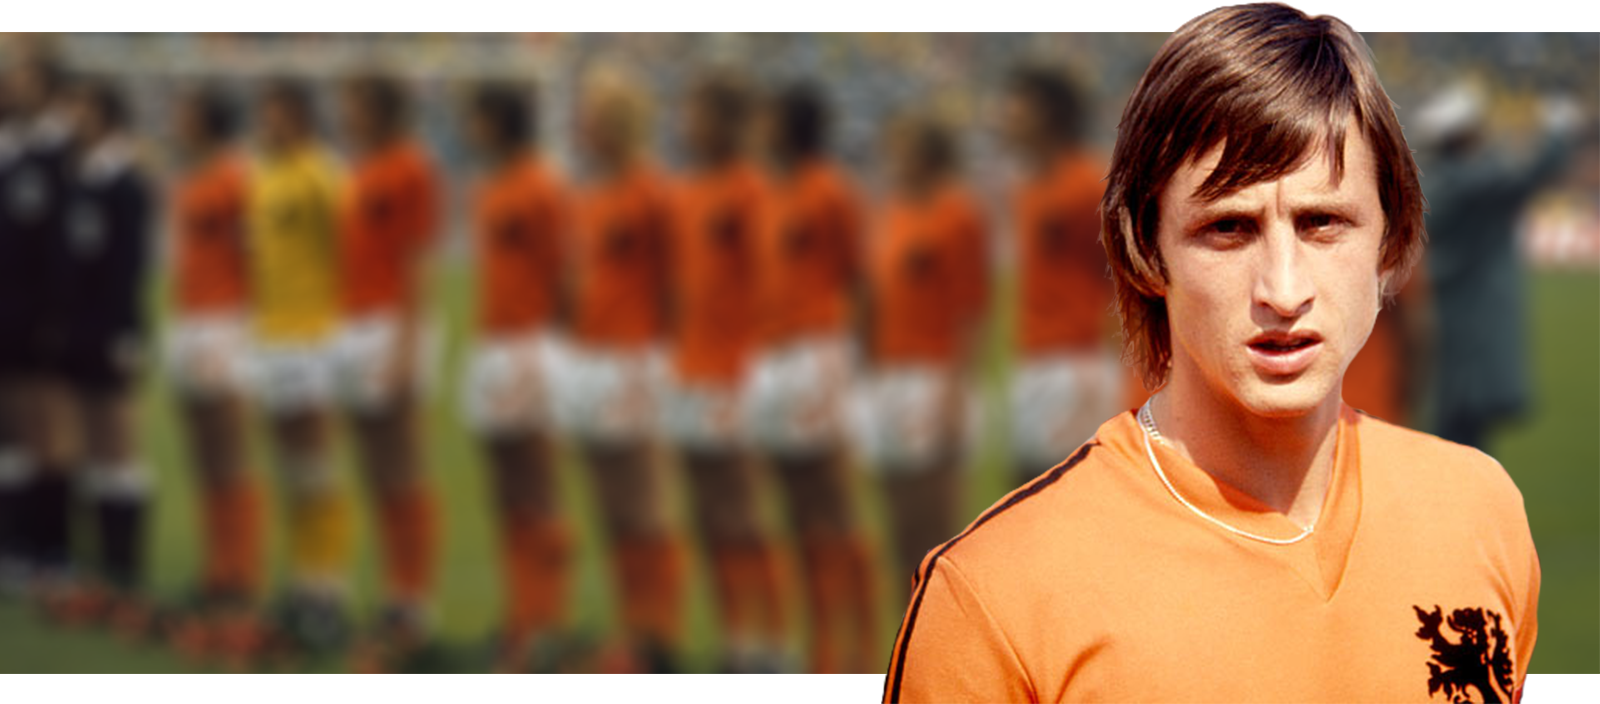 Йохан Кройфф, сборная Нидерландов по футболу, Барселона, Аякс, фото